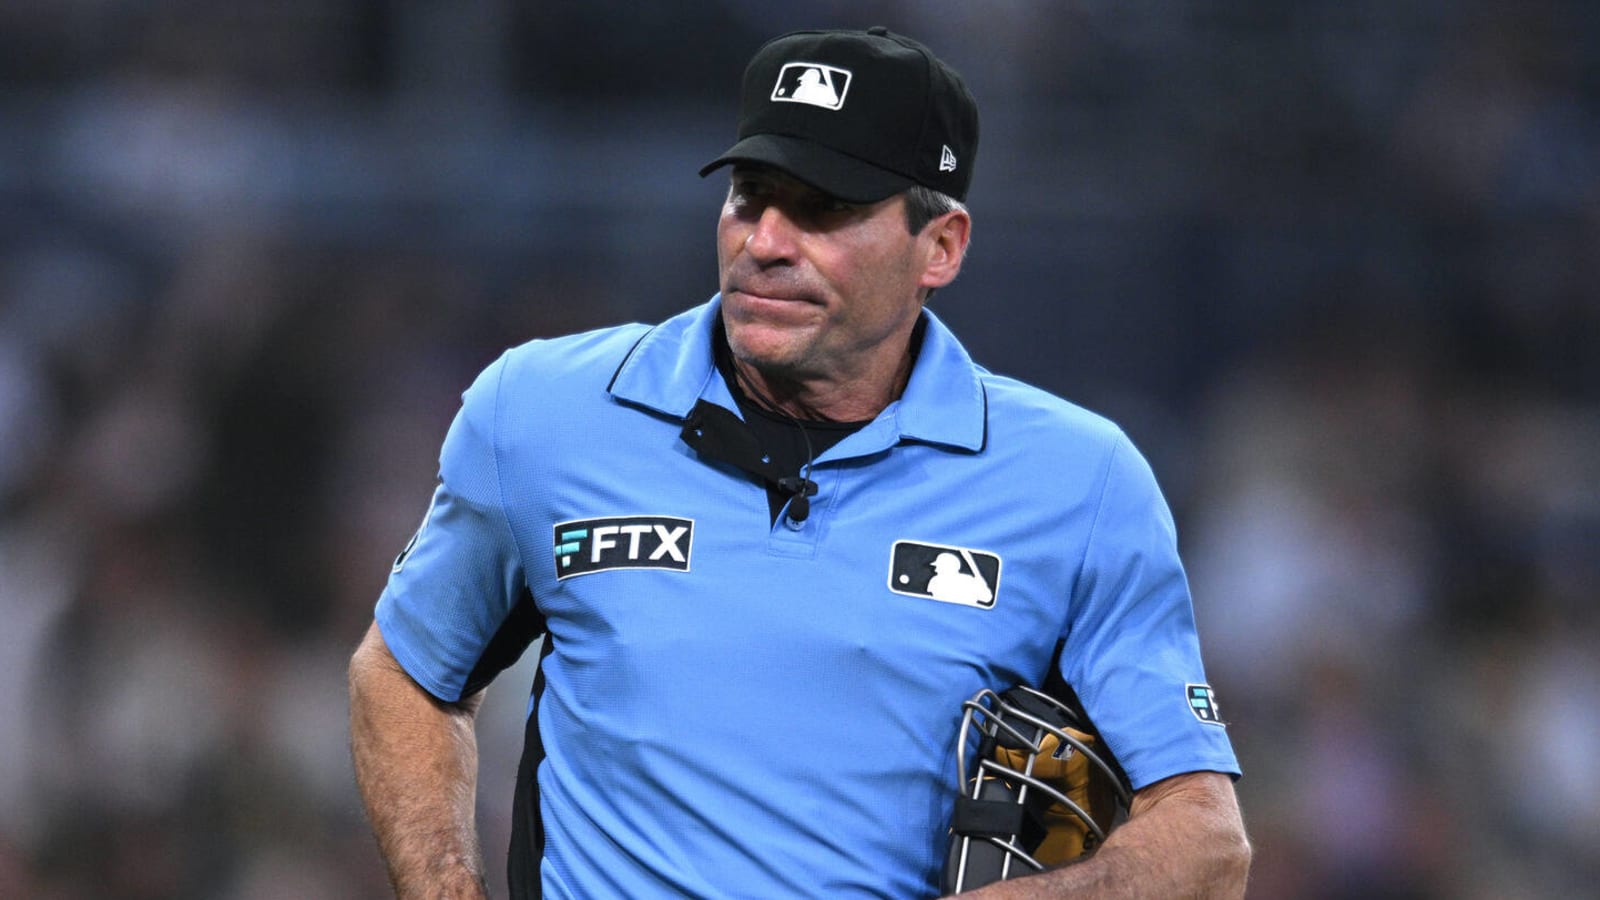 Umpire loses appeal of discrimination lawsuit against MLB